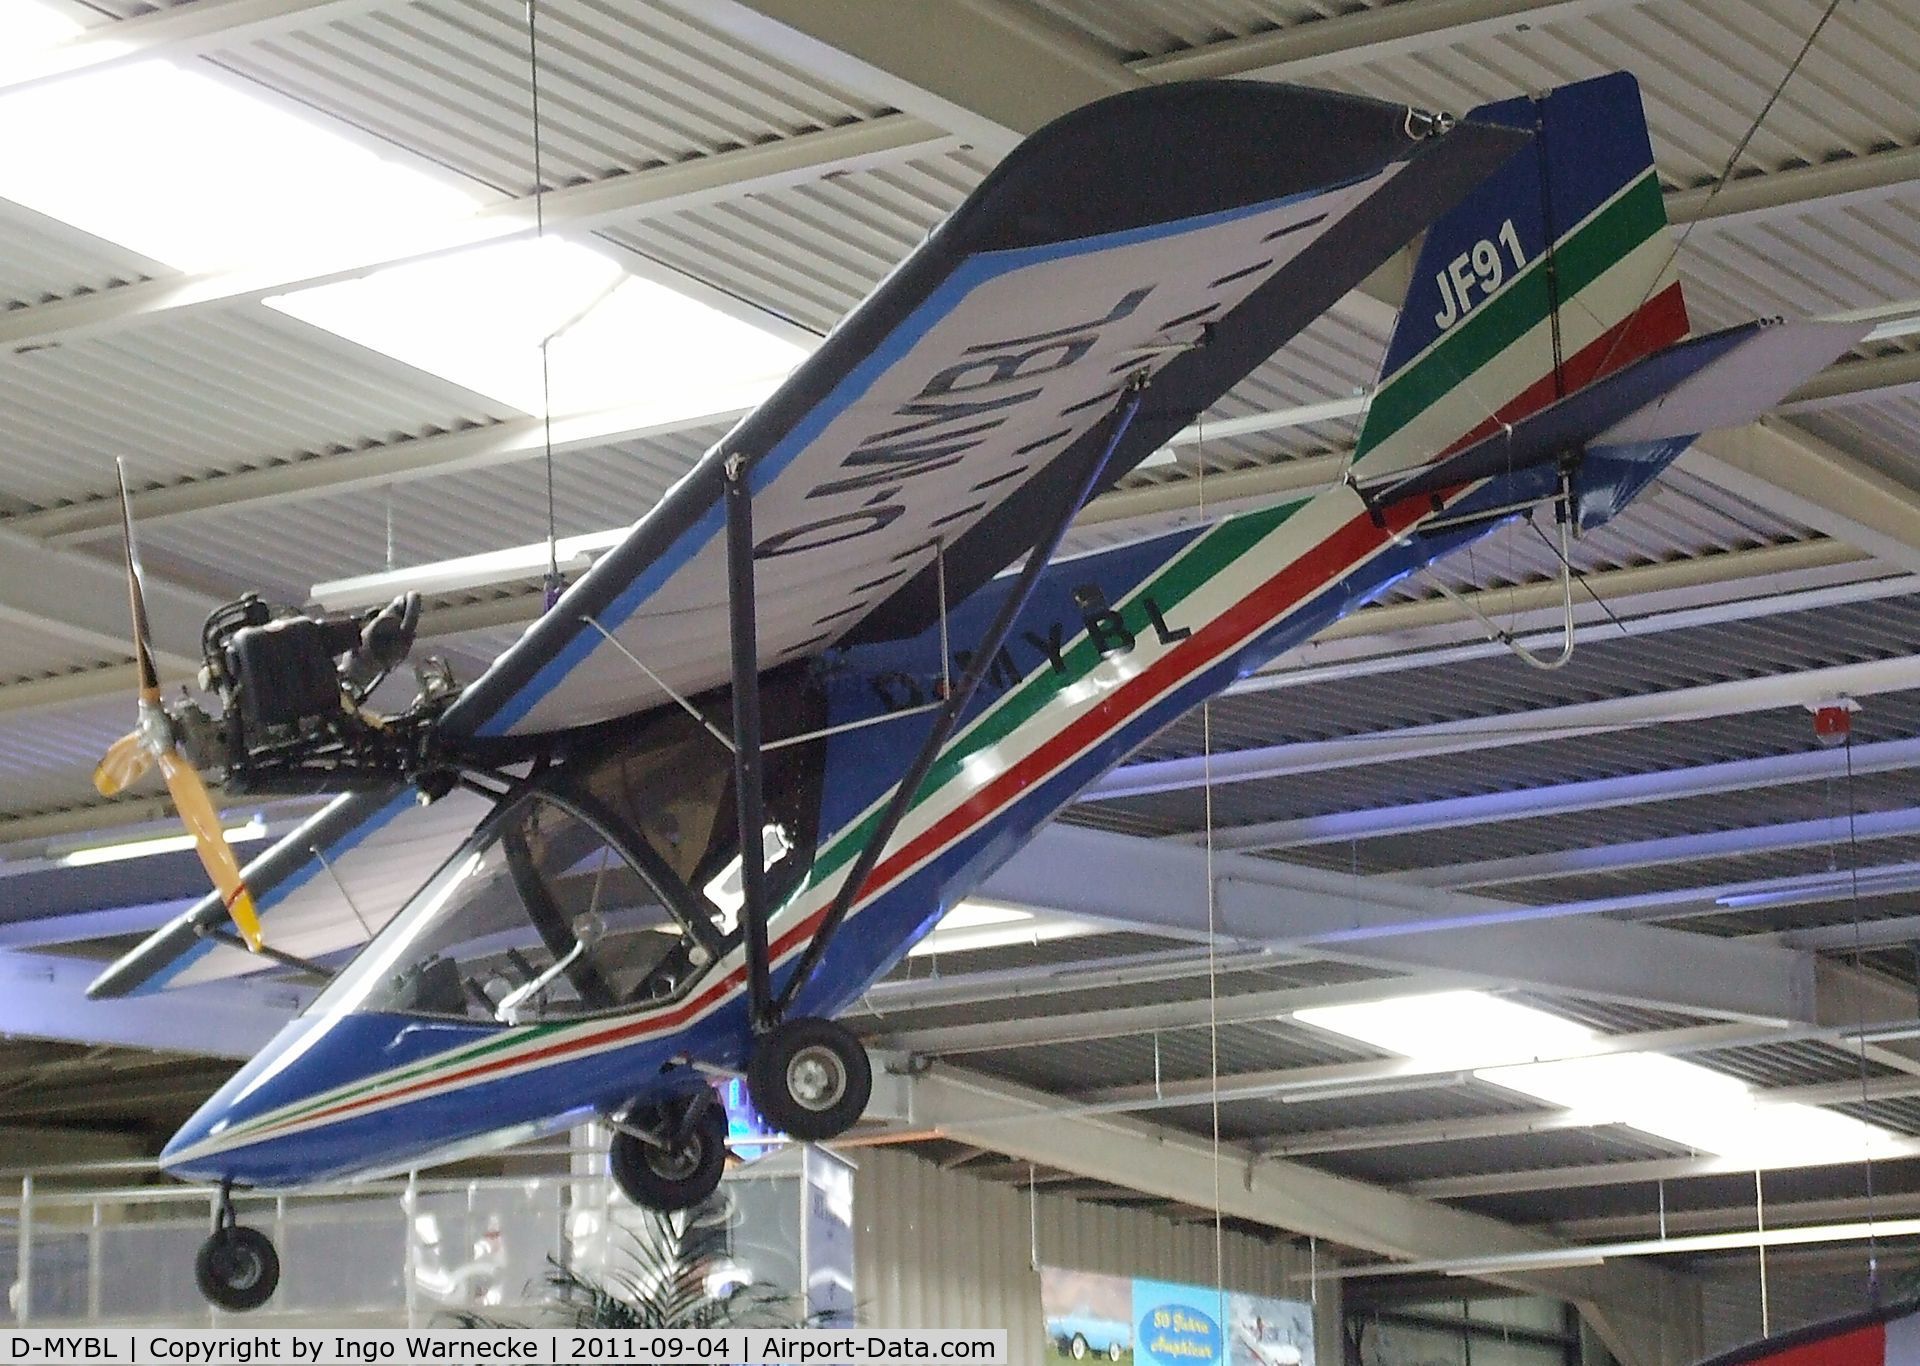 D-MYBL, Euro Ala Jet Fox 91-D C/N 0002, Euro Ala Jet Fox 91-D at the Auto & Technik Museum, Sinsheim